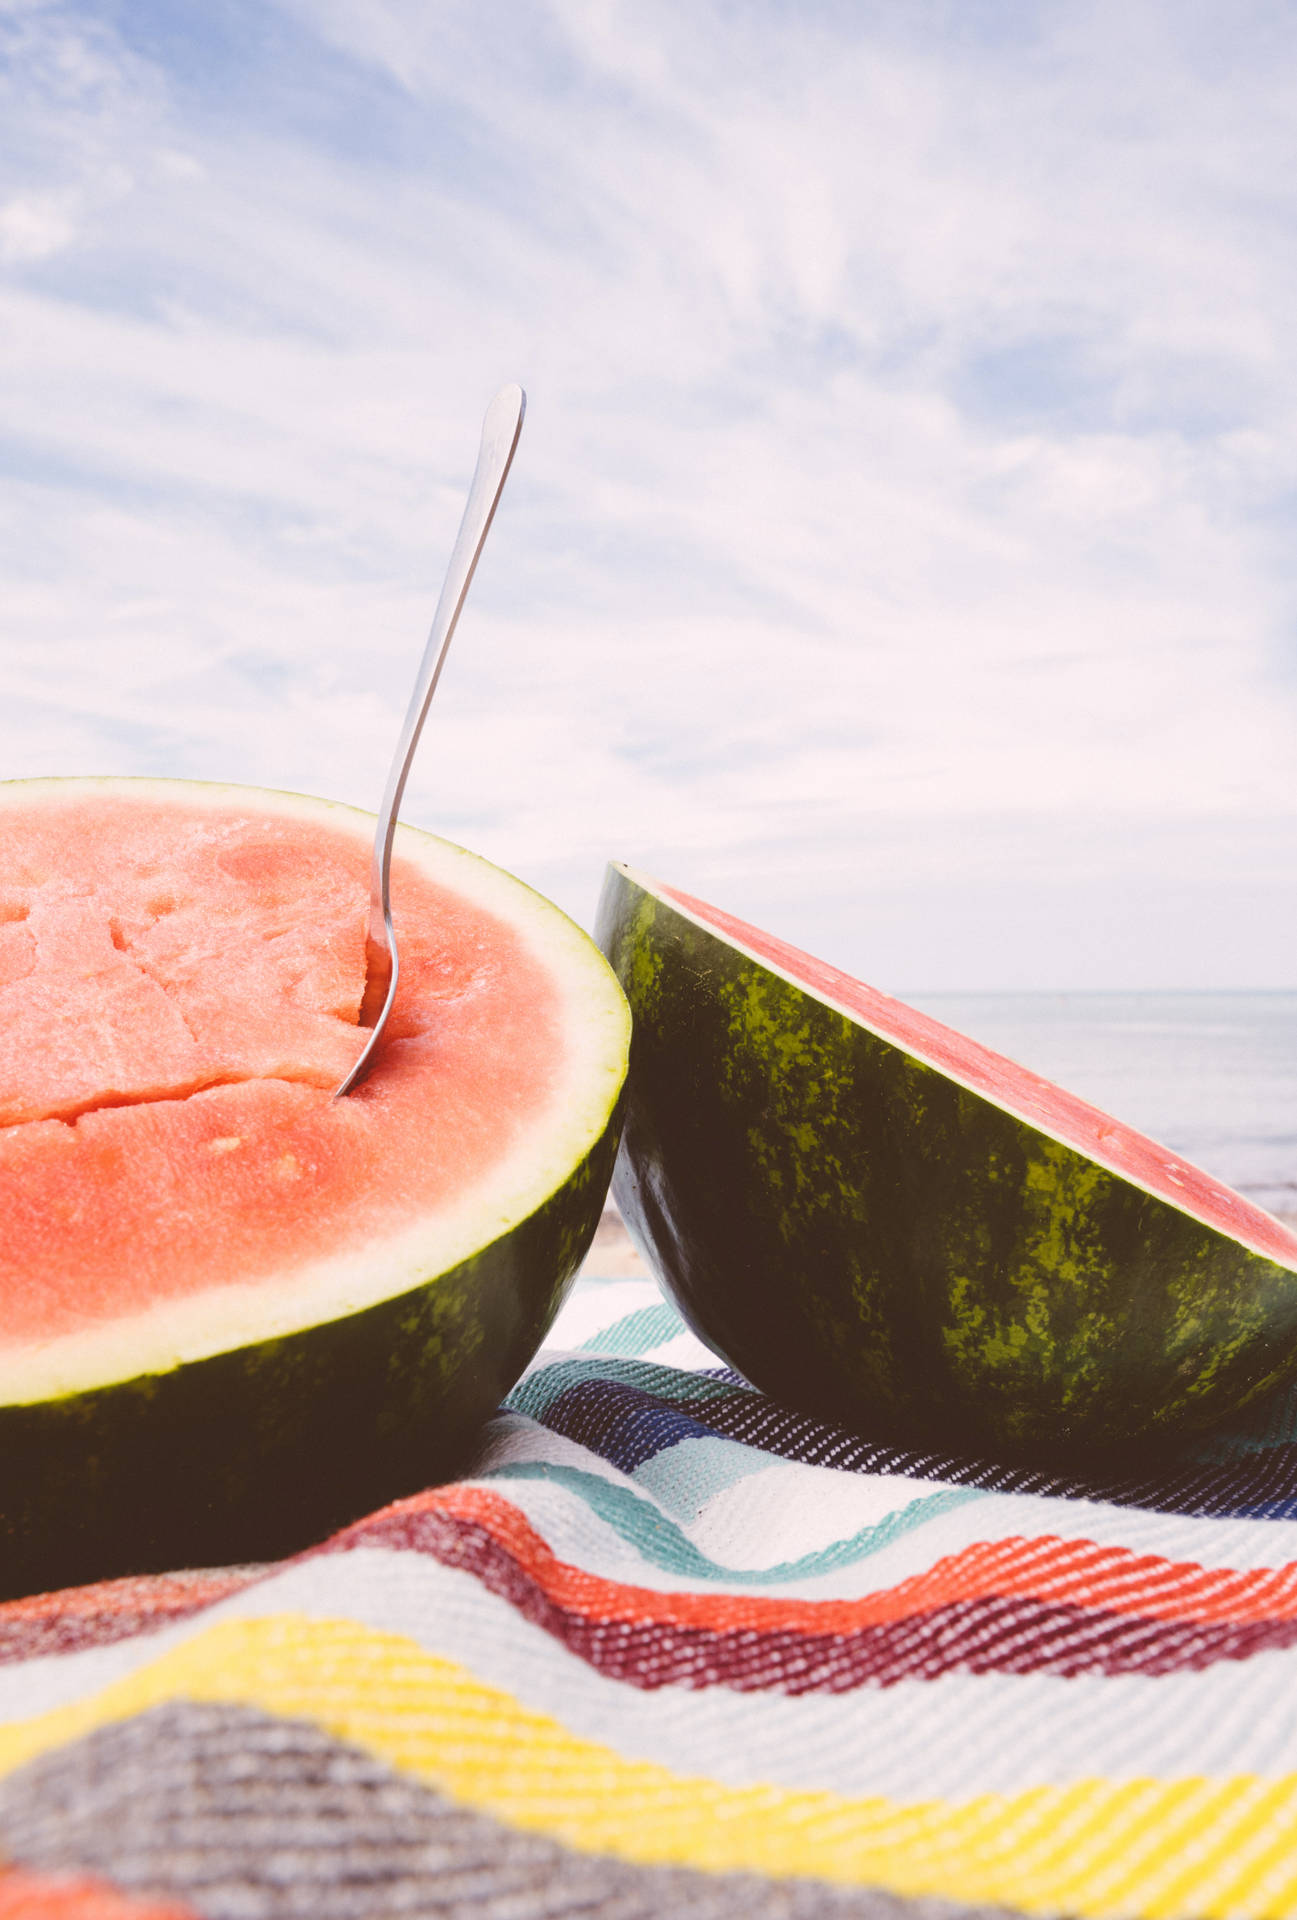 Watermelons In Summer Wallpaper